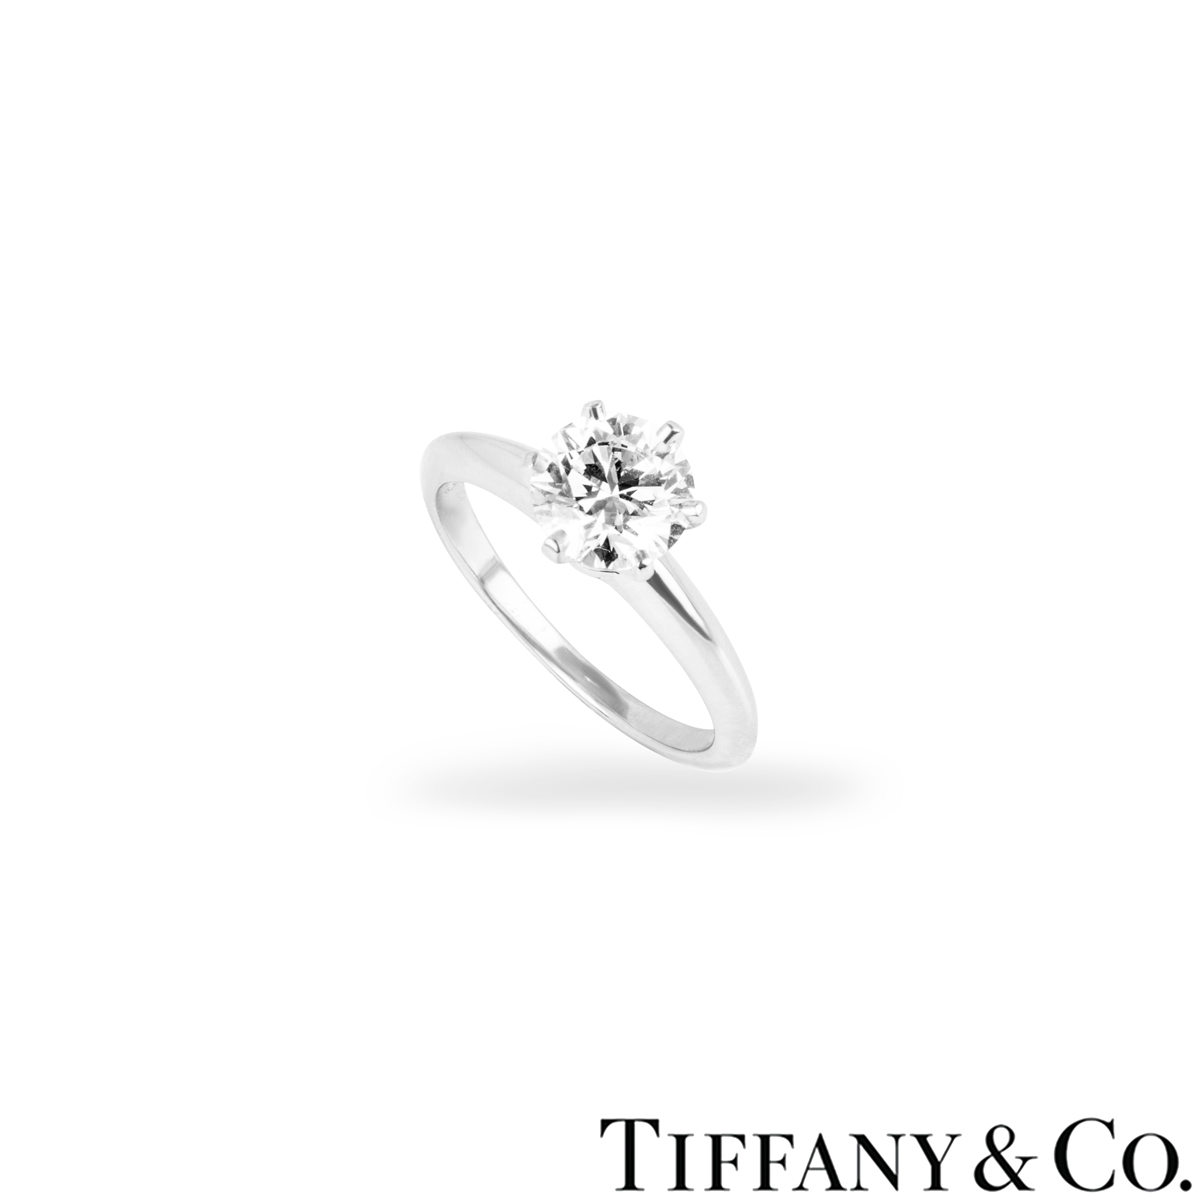 Tiffany & Co. Platinum Diamond Setting Ring 1.27ct G/VS1